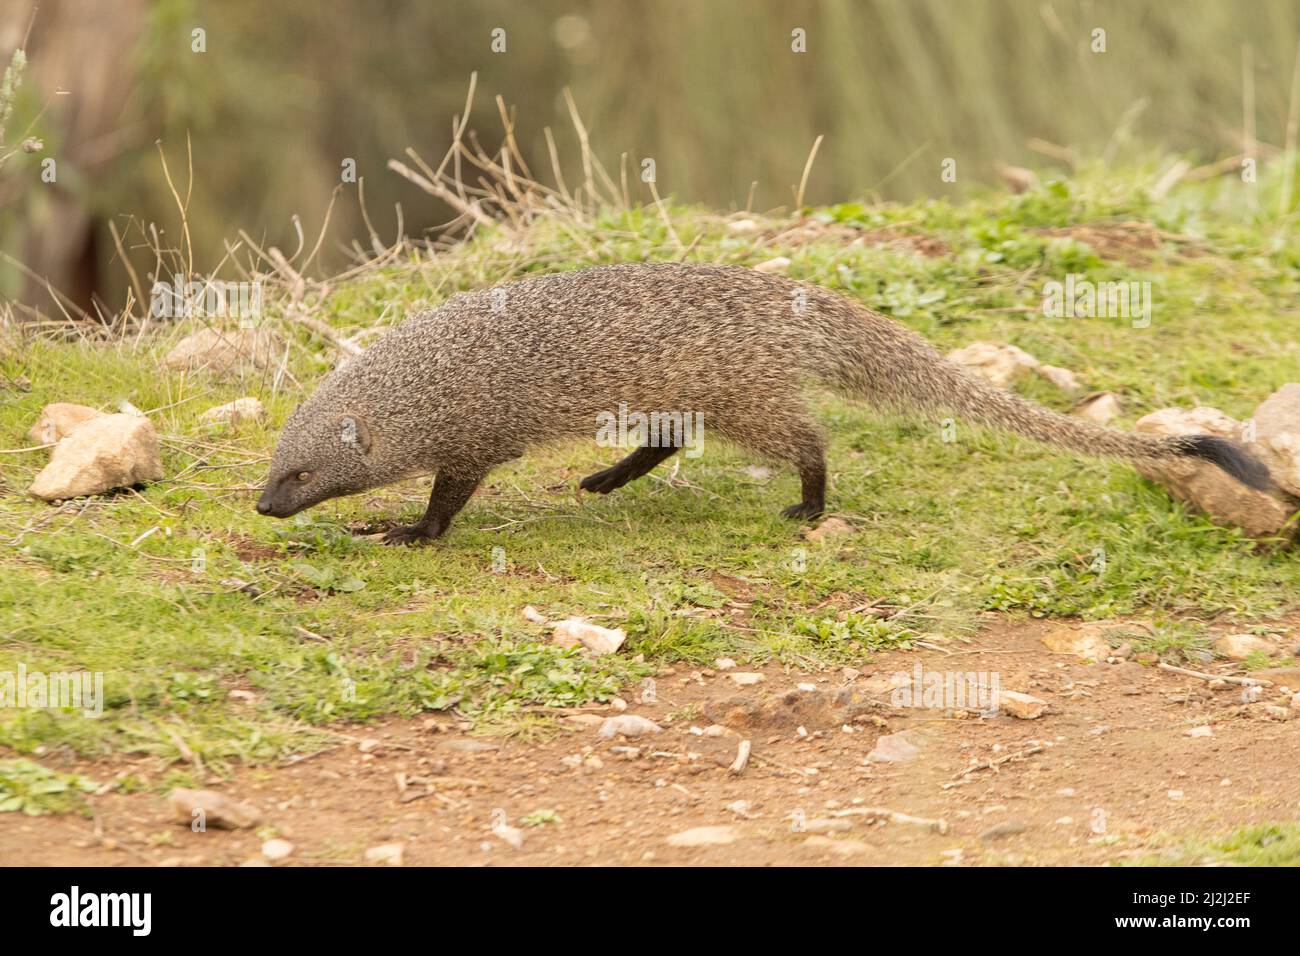 Fauna spain spanish wildlife iberian wildlife hi-res stock photography and  images - Alamy